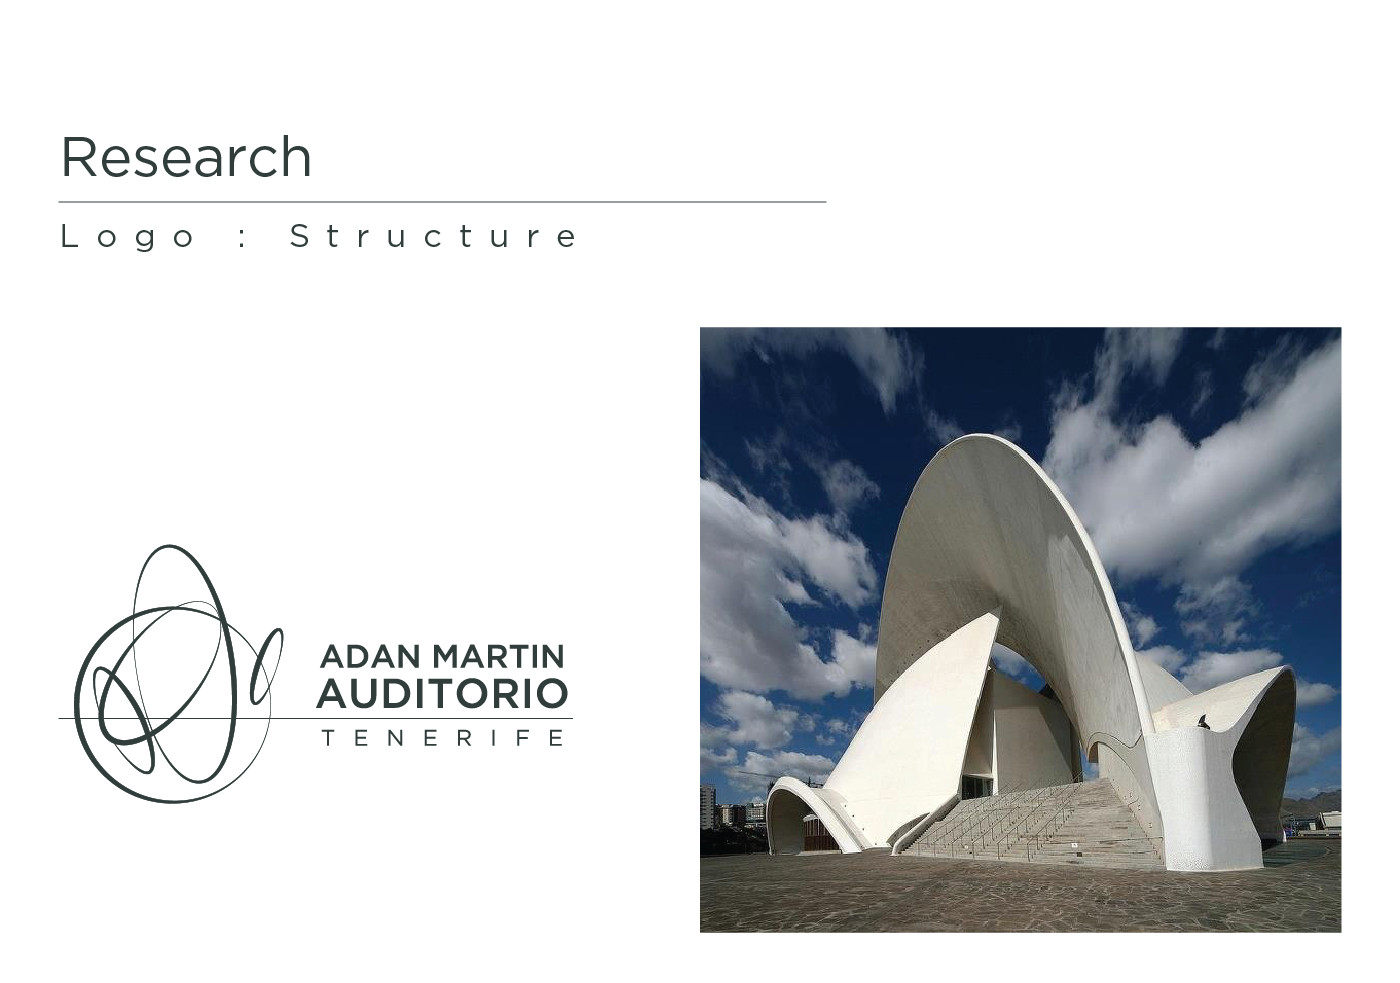 tenerife adan martin auditorio Visual Communication design visual identity Santiago Calatrava calatrava architect identity Dynamic logo grid presentation